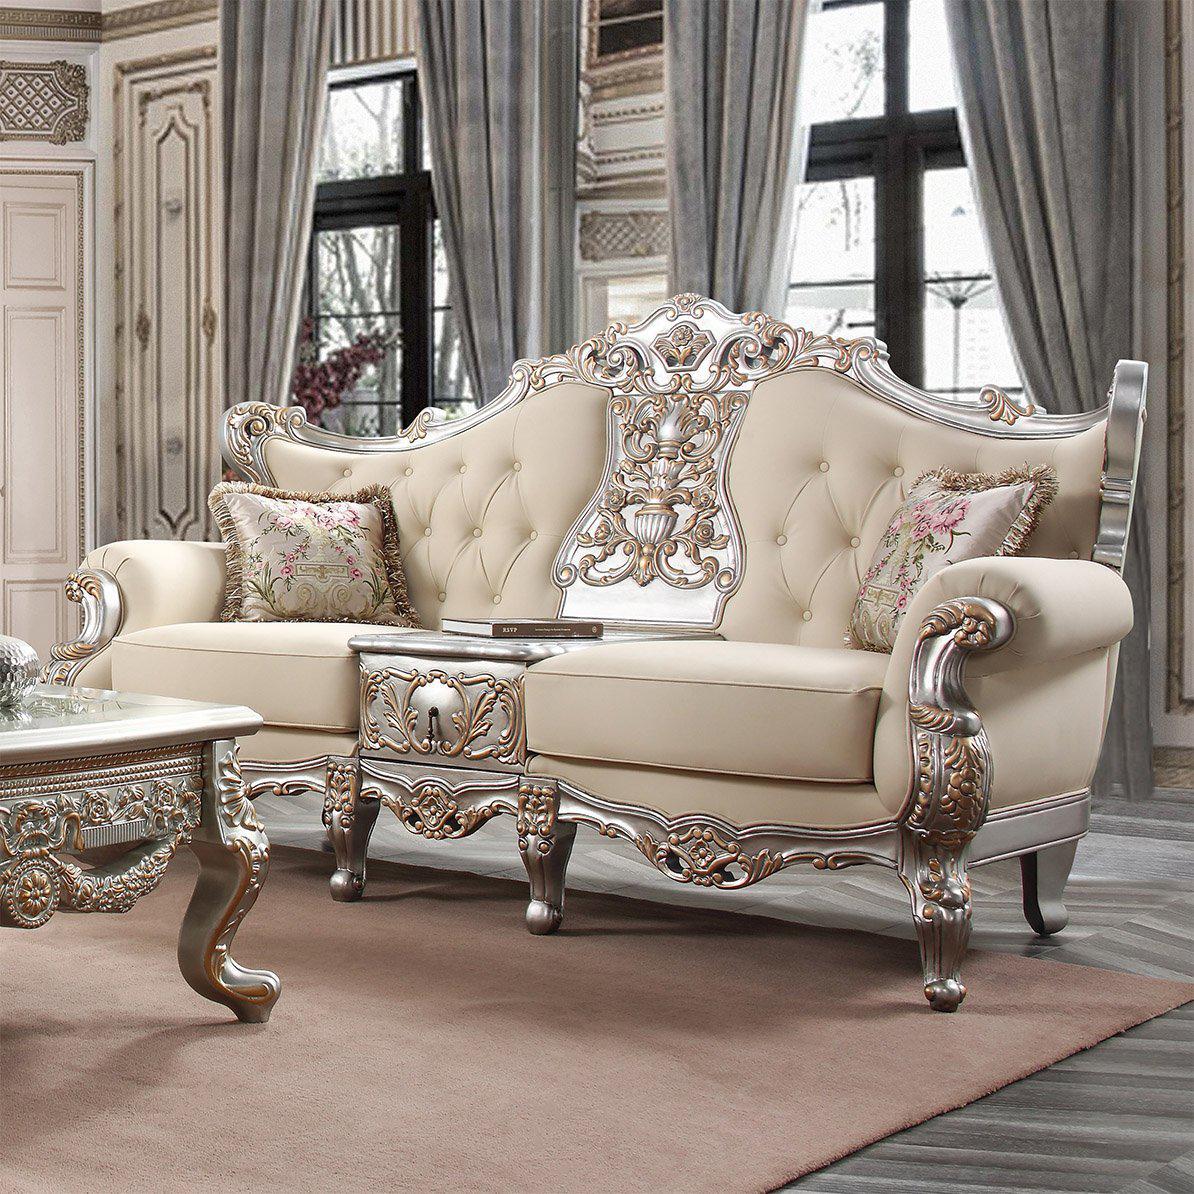 Homey Design Luxury Hd-91633 - 3Pc French Salon Sofa Set-Iron Home Concepts